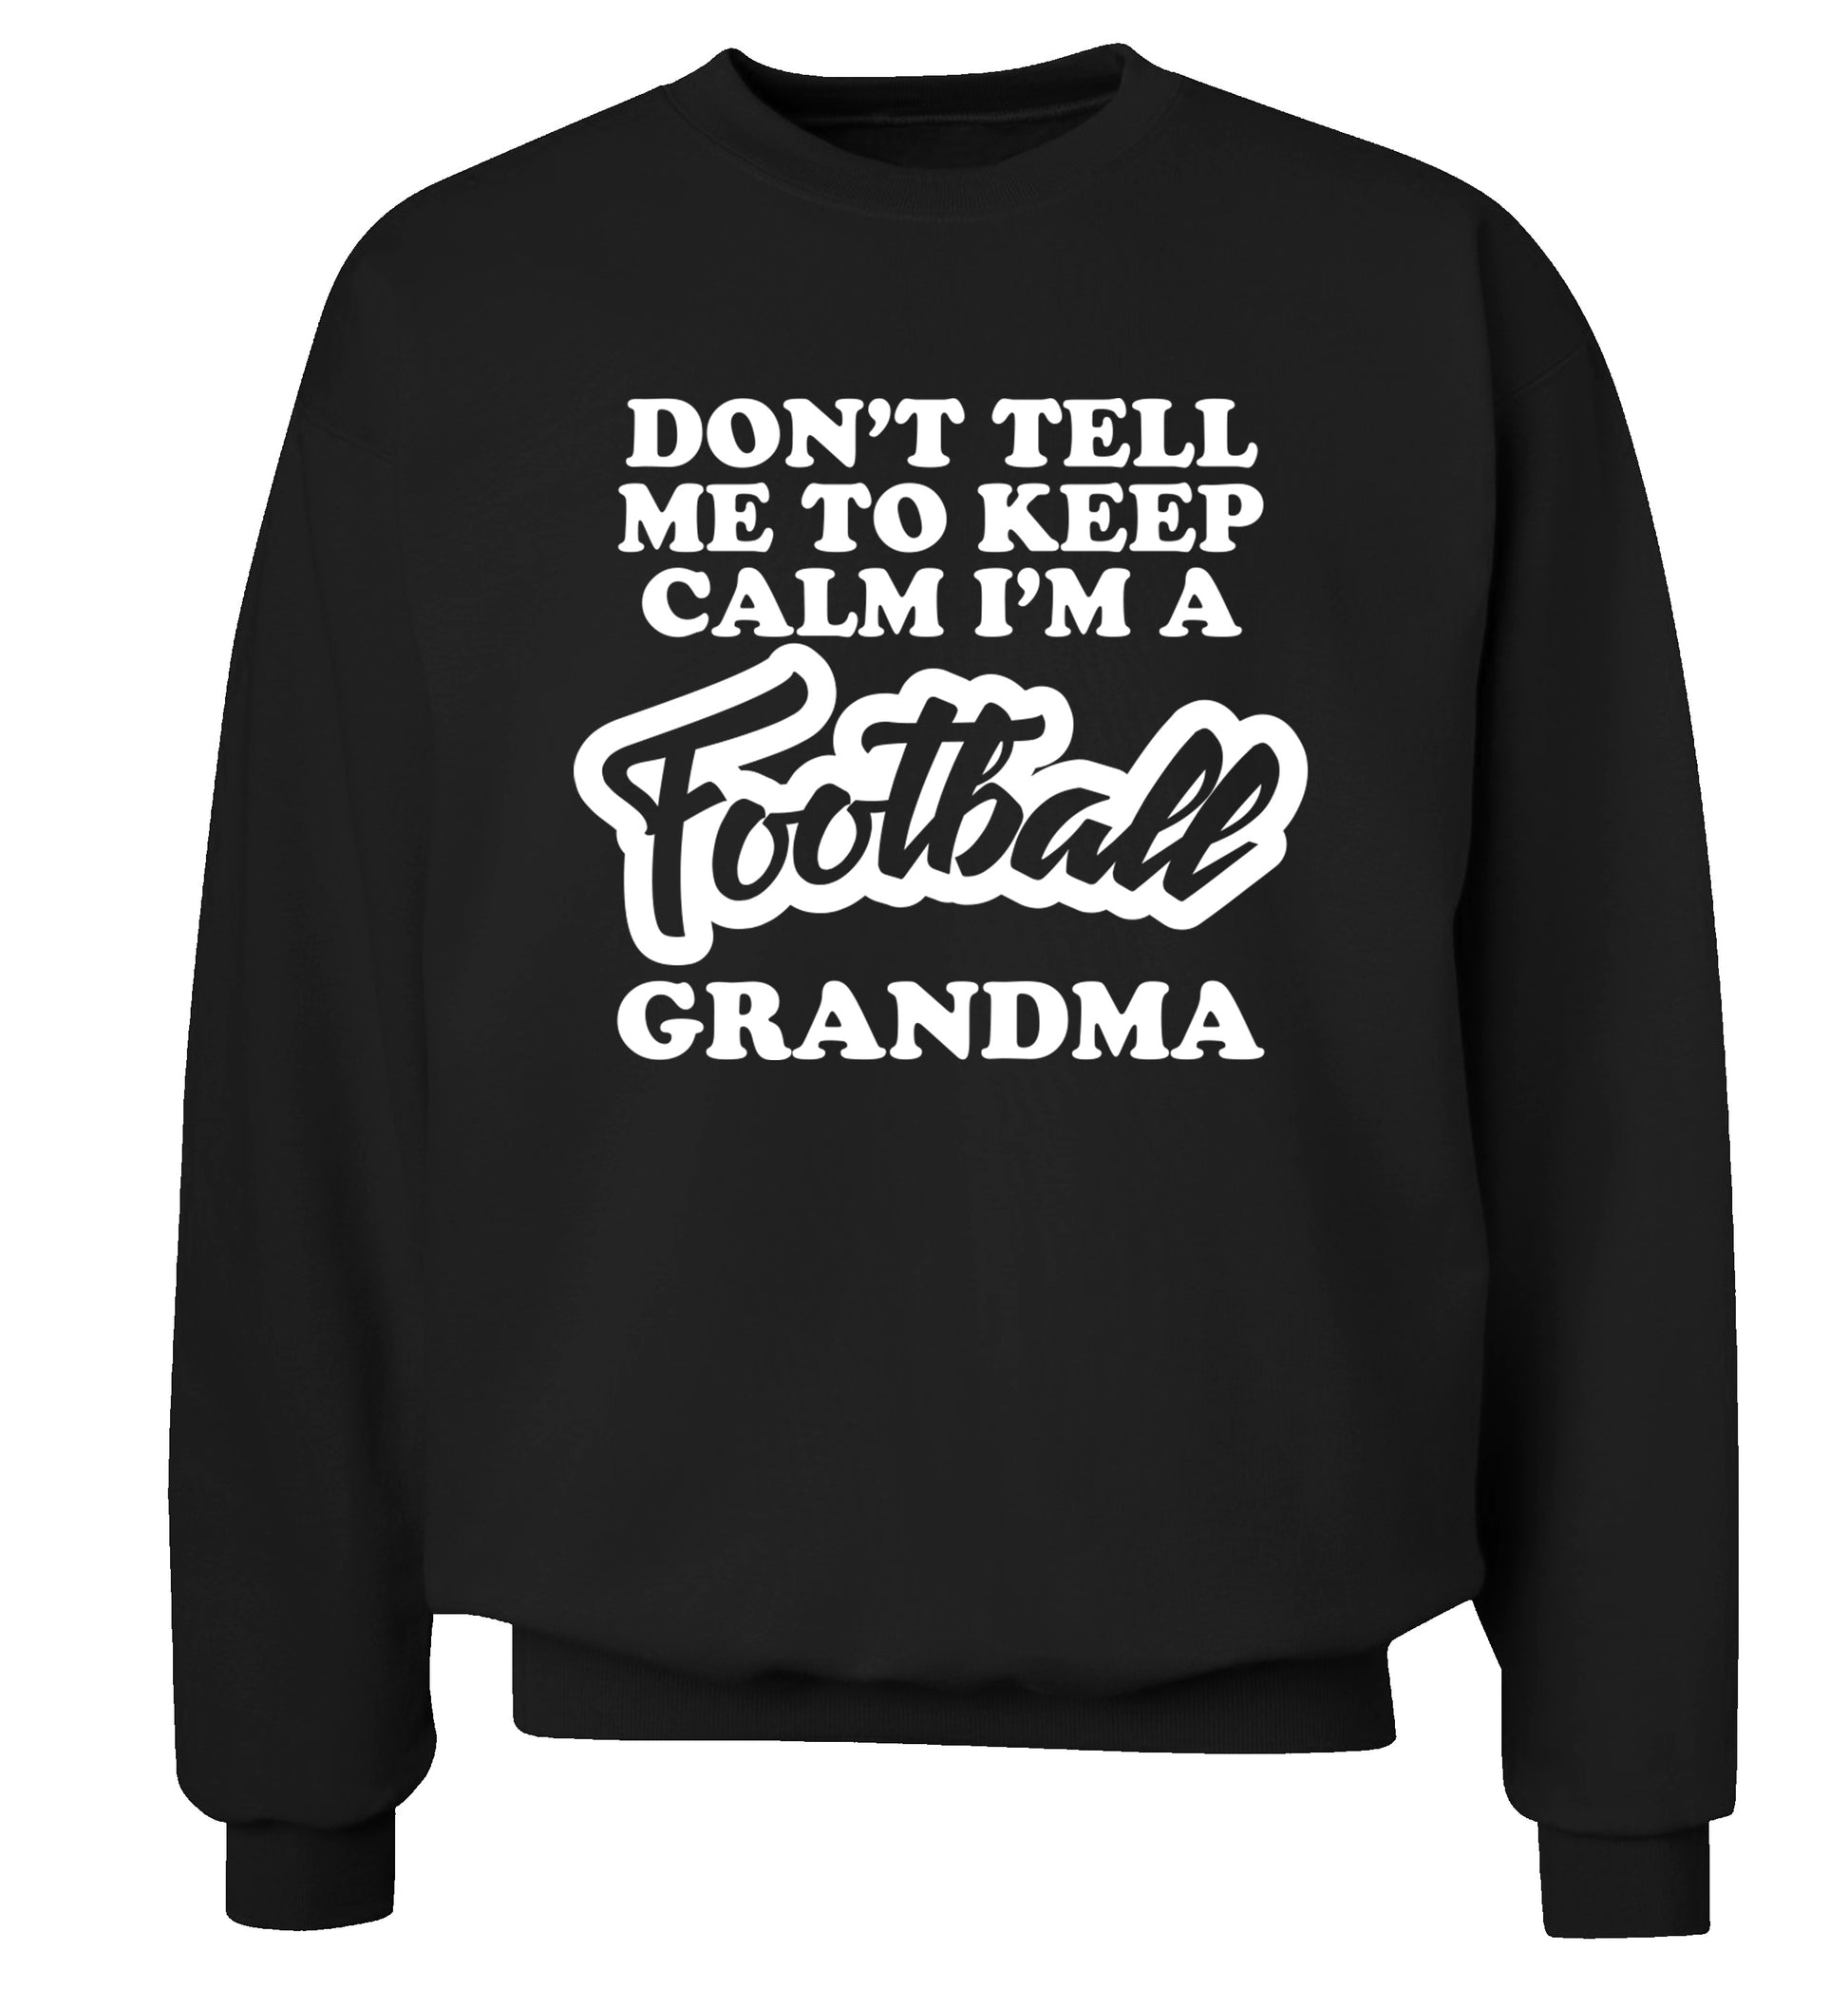 Don't tell me to keep calm I'm a football grandma Adult's unisexblack Sweater 2XL